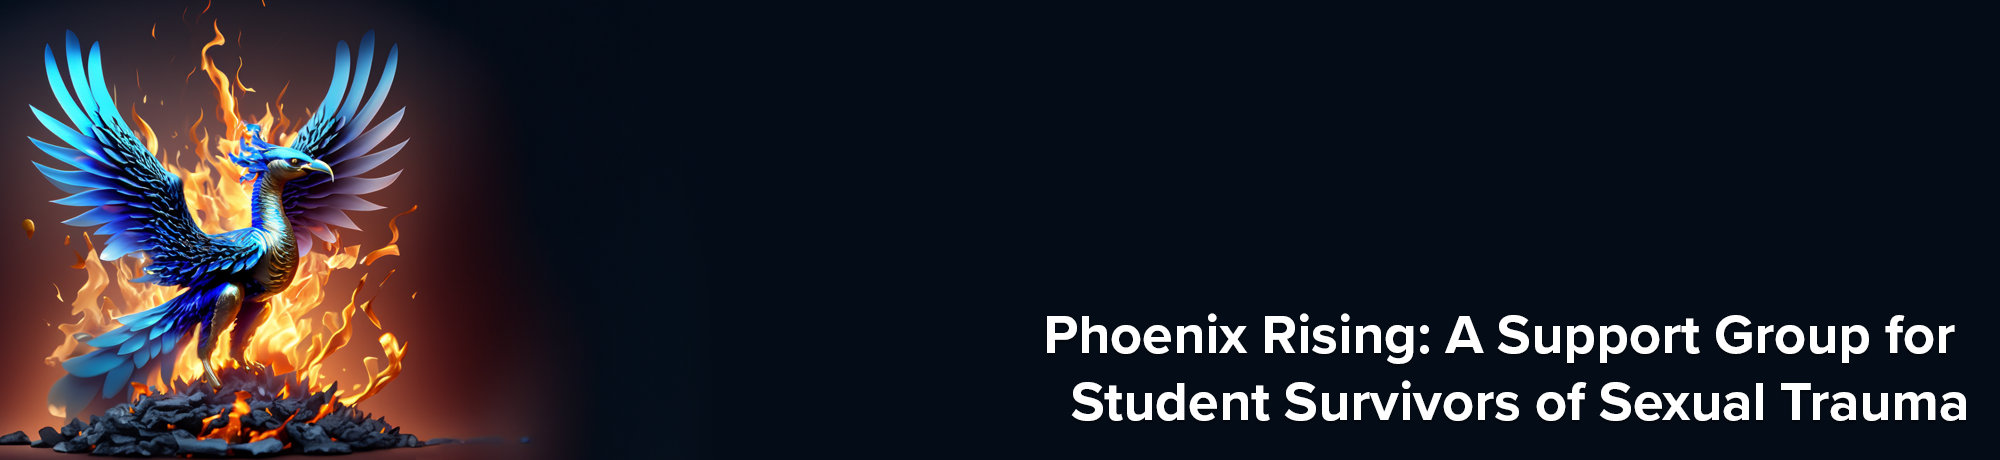 Phoenix Rising Group Banner